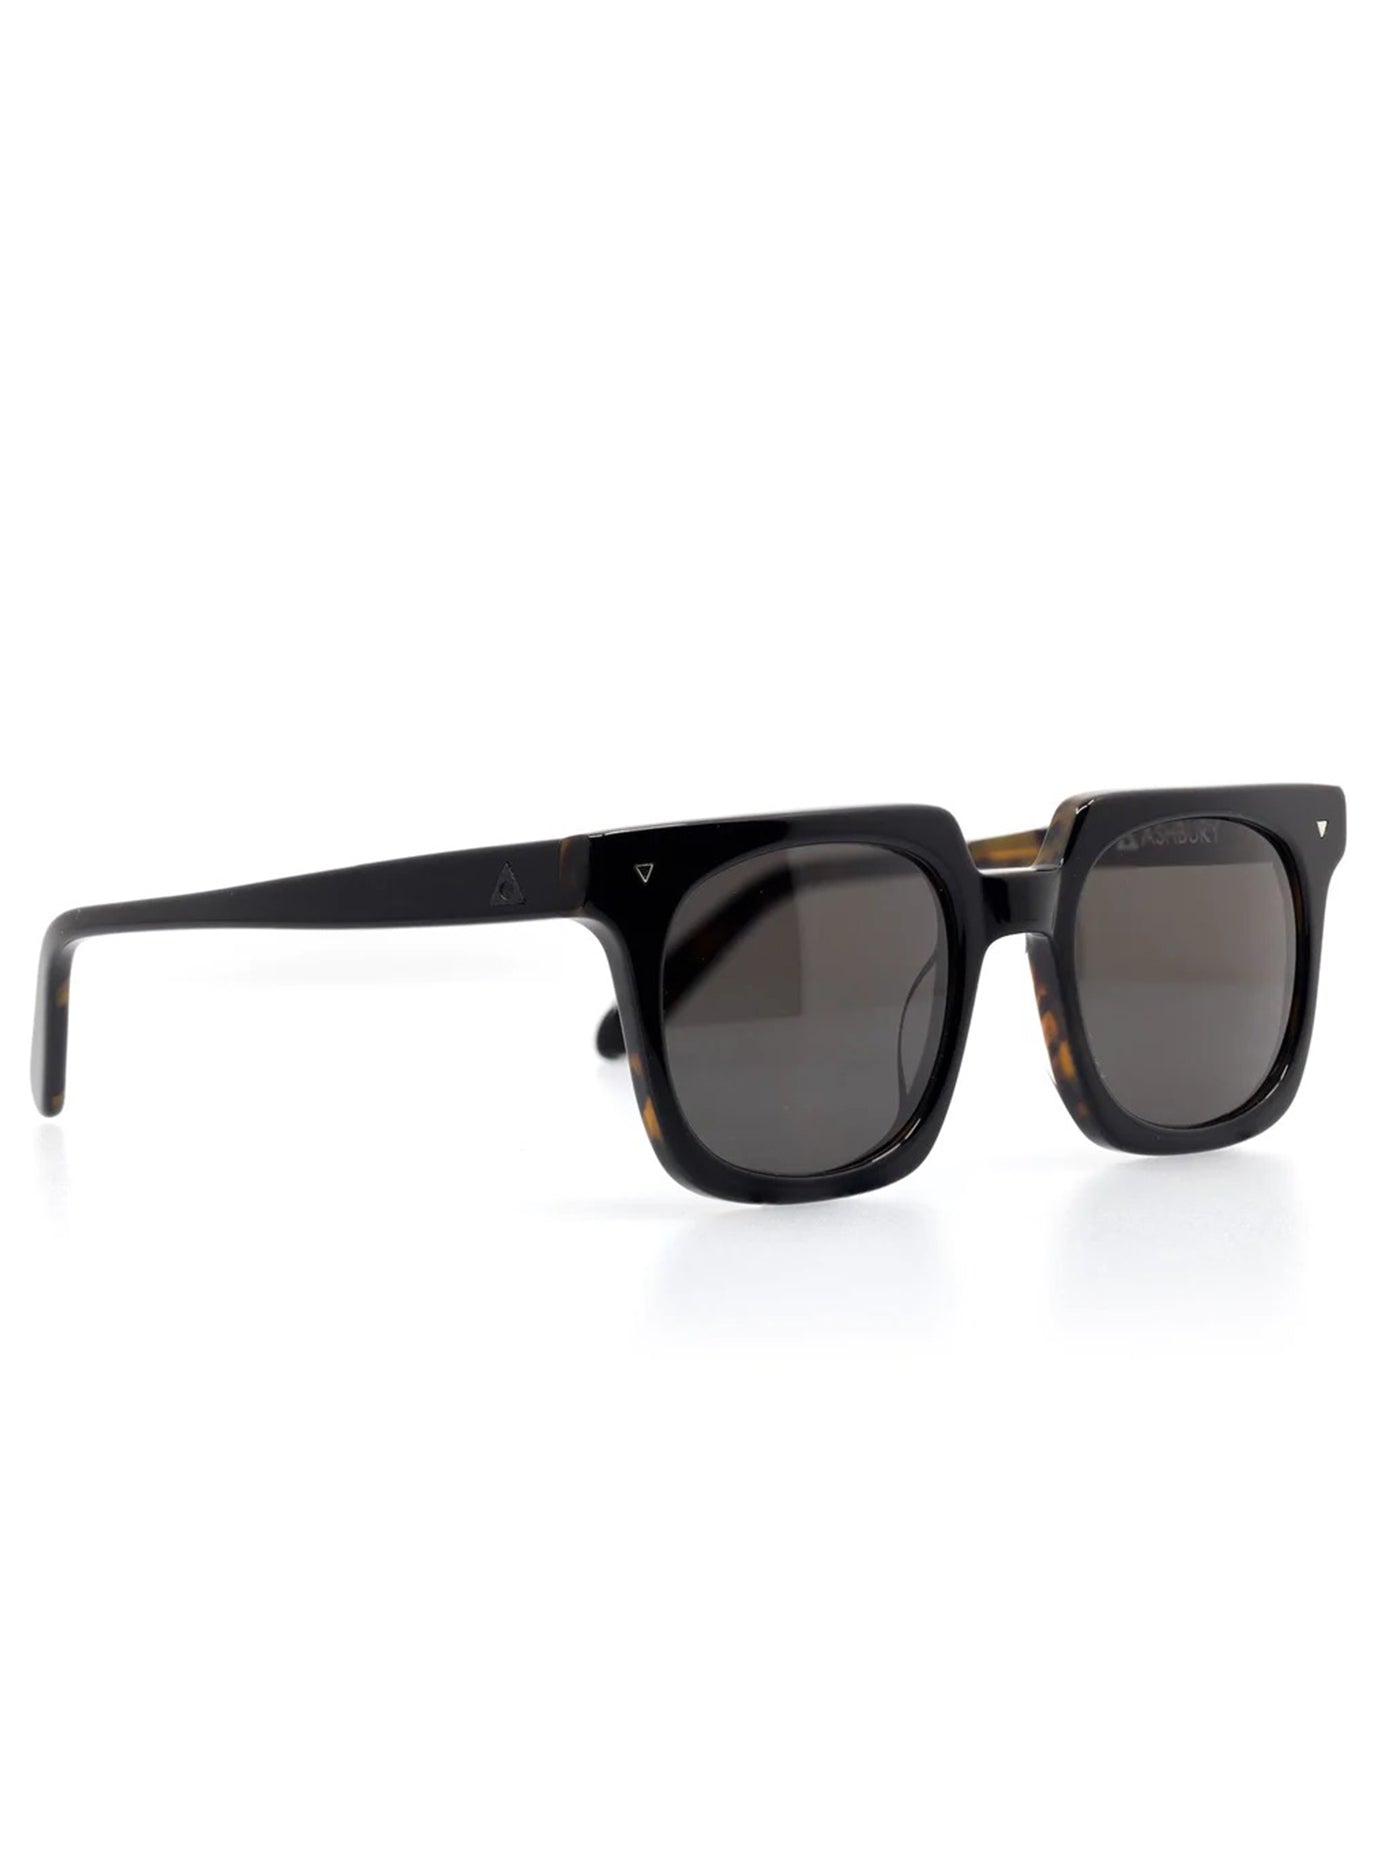 Ashbury Ace Sunglasses